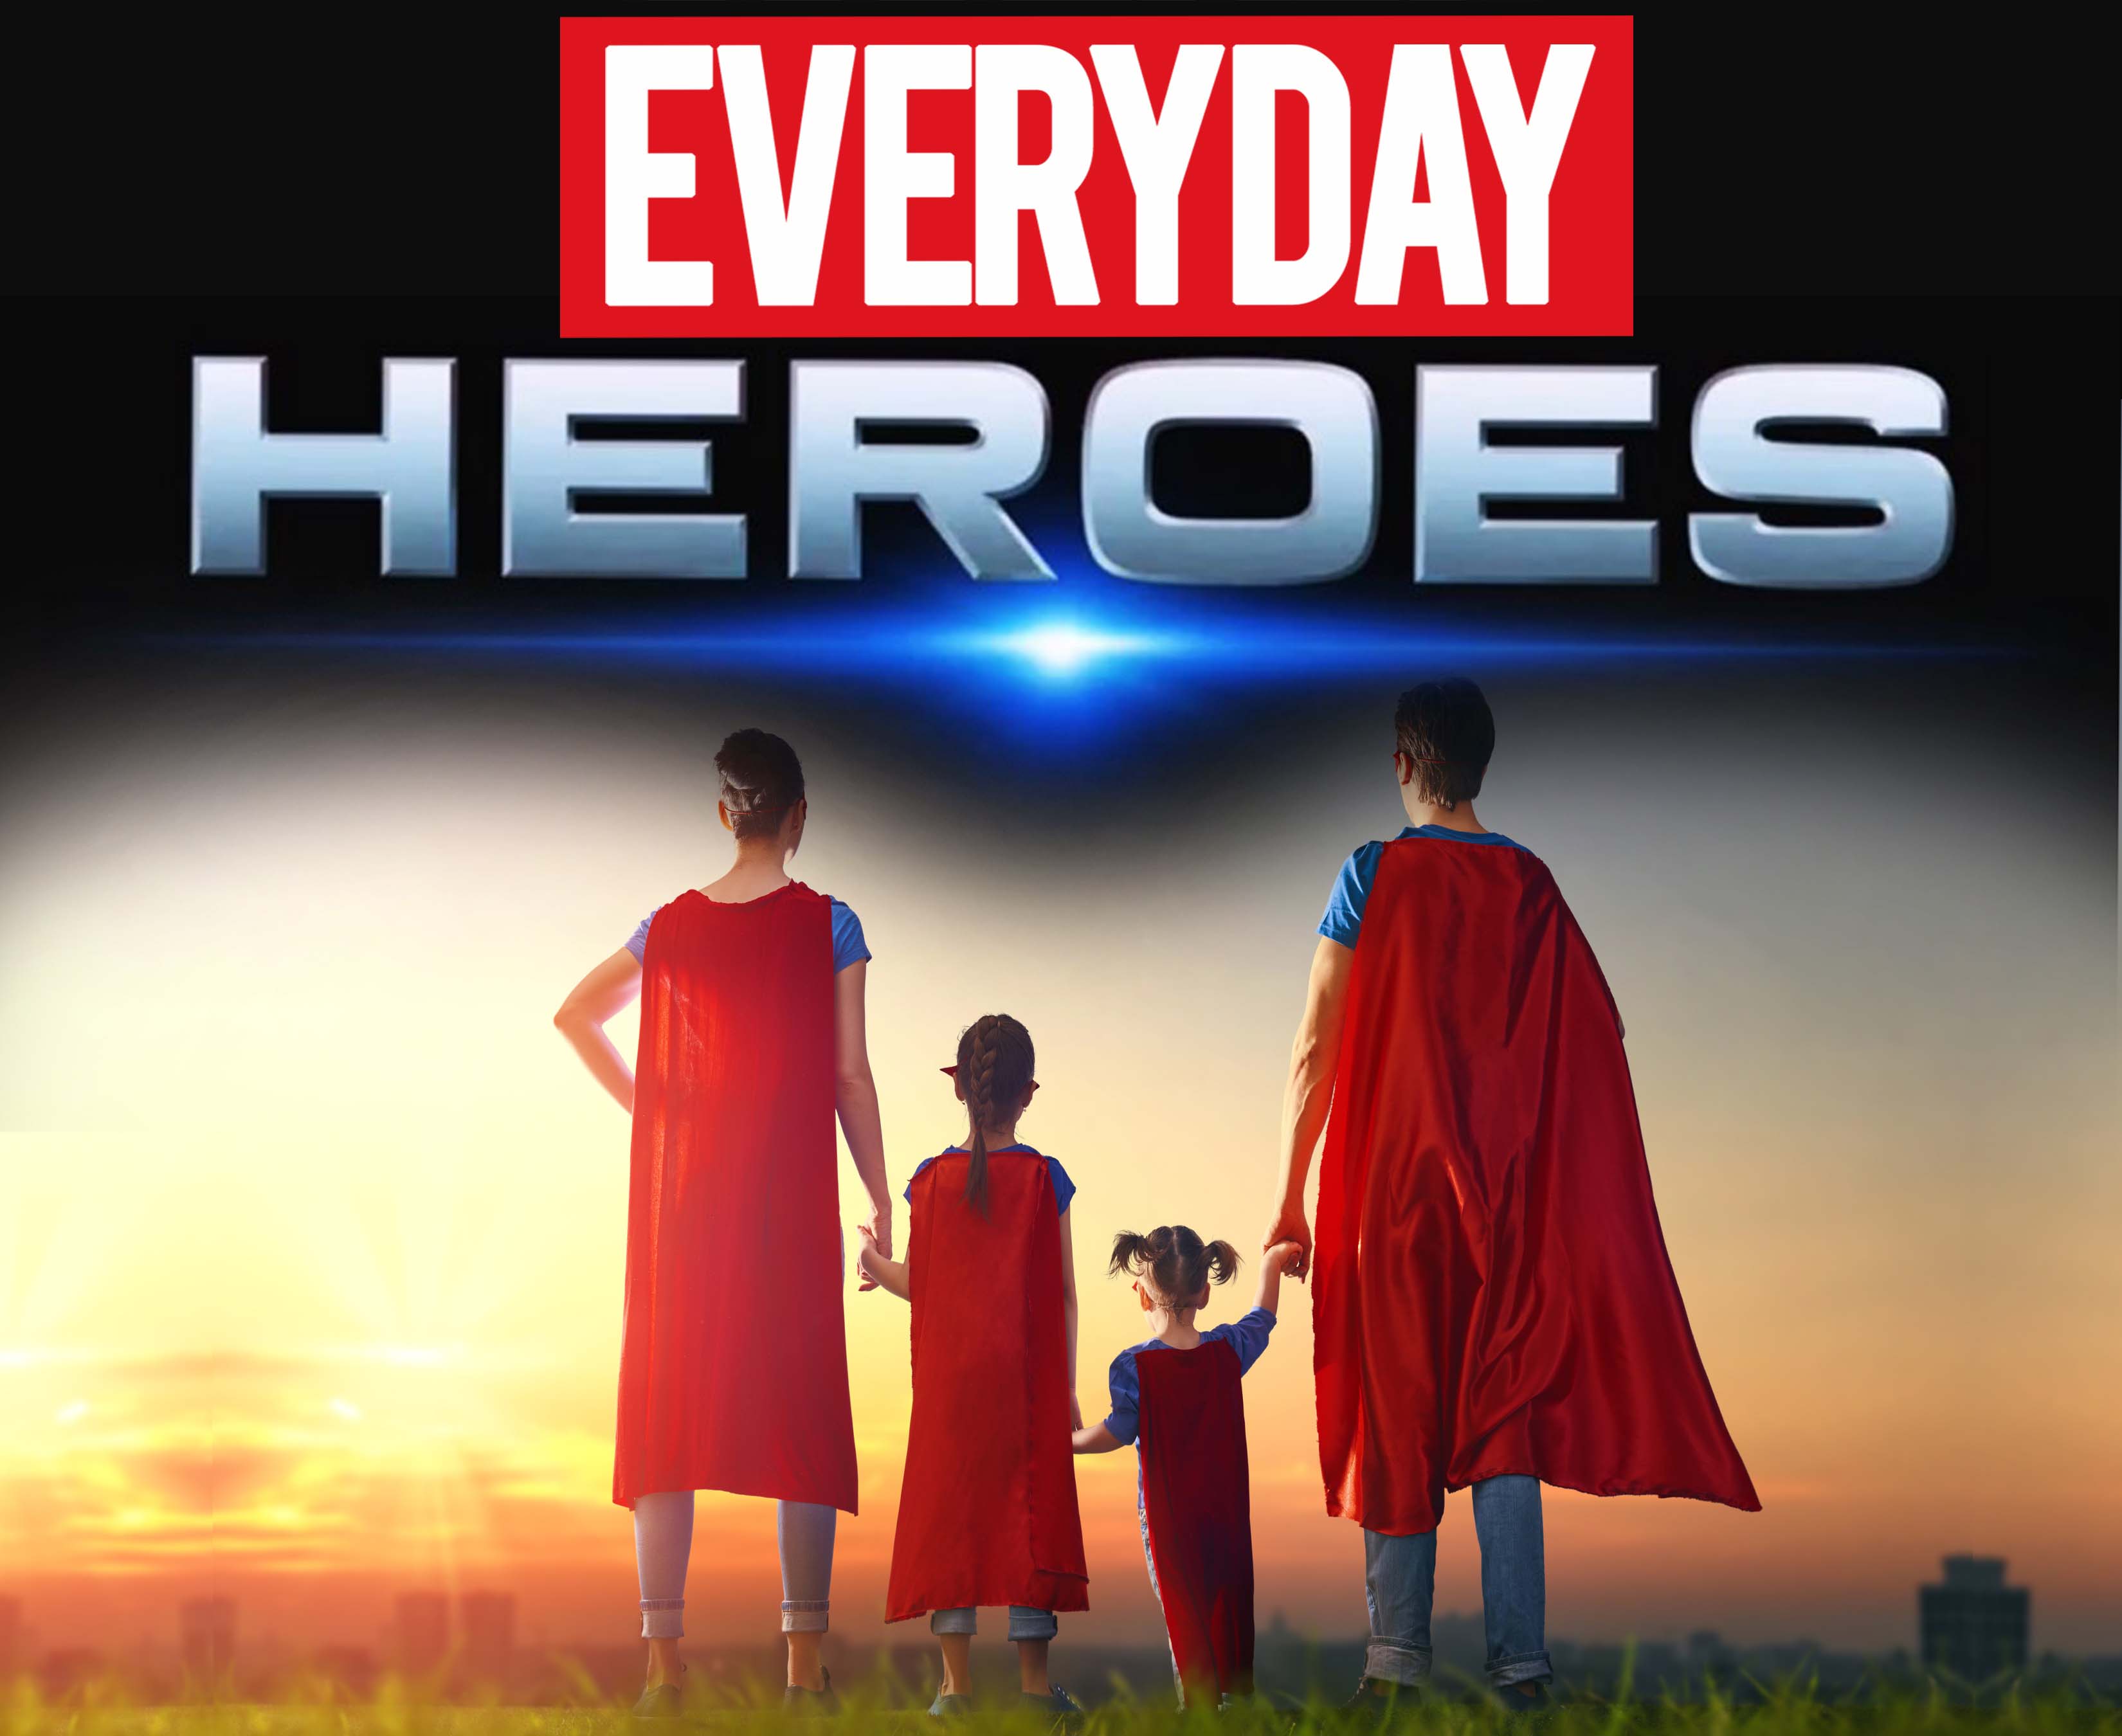 8-6-17 Everyday Heroes - Part 1 